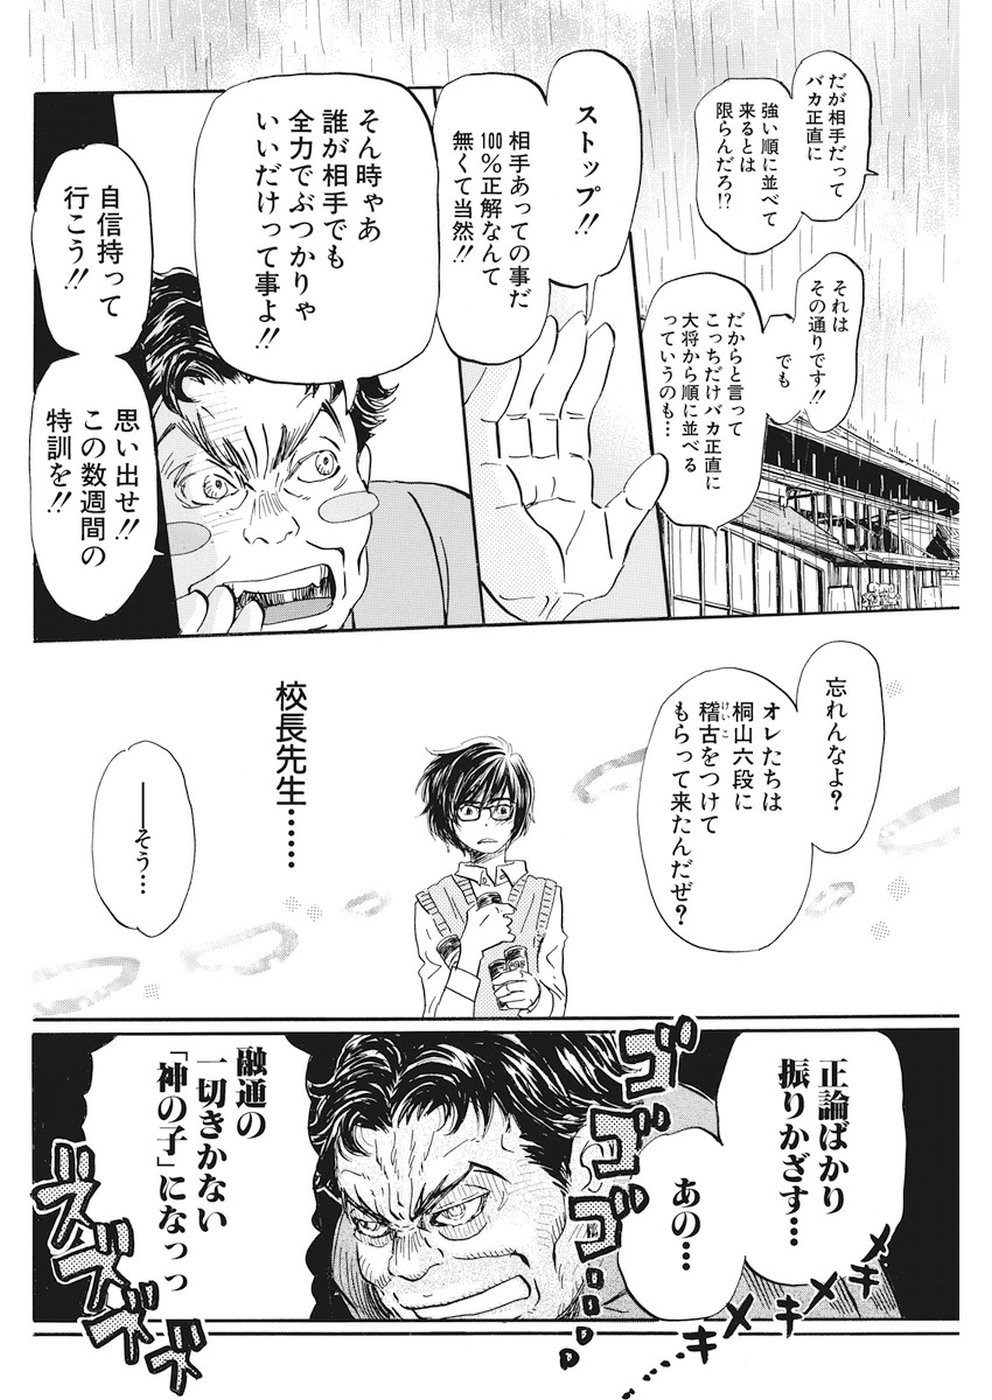 3 Gatsu no Lion - Chapter 150 - Page 10